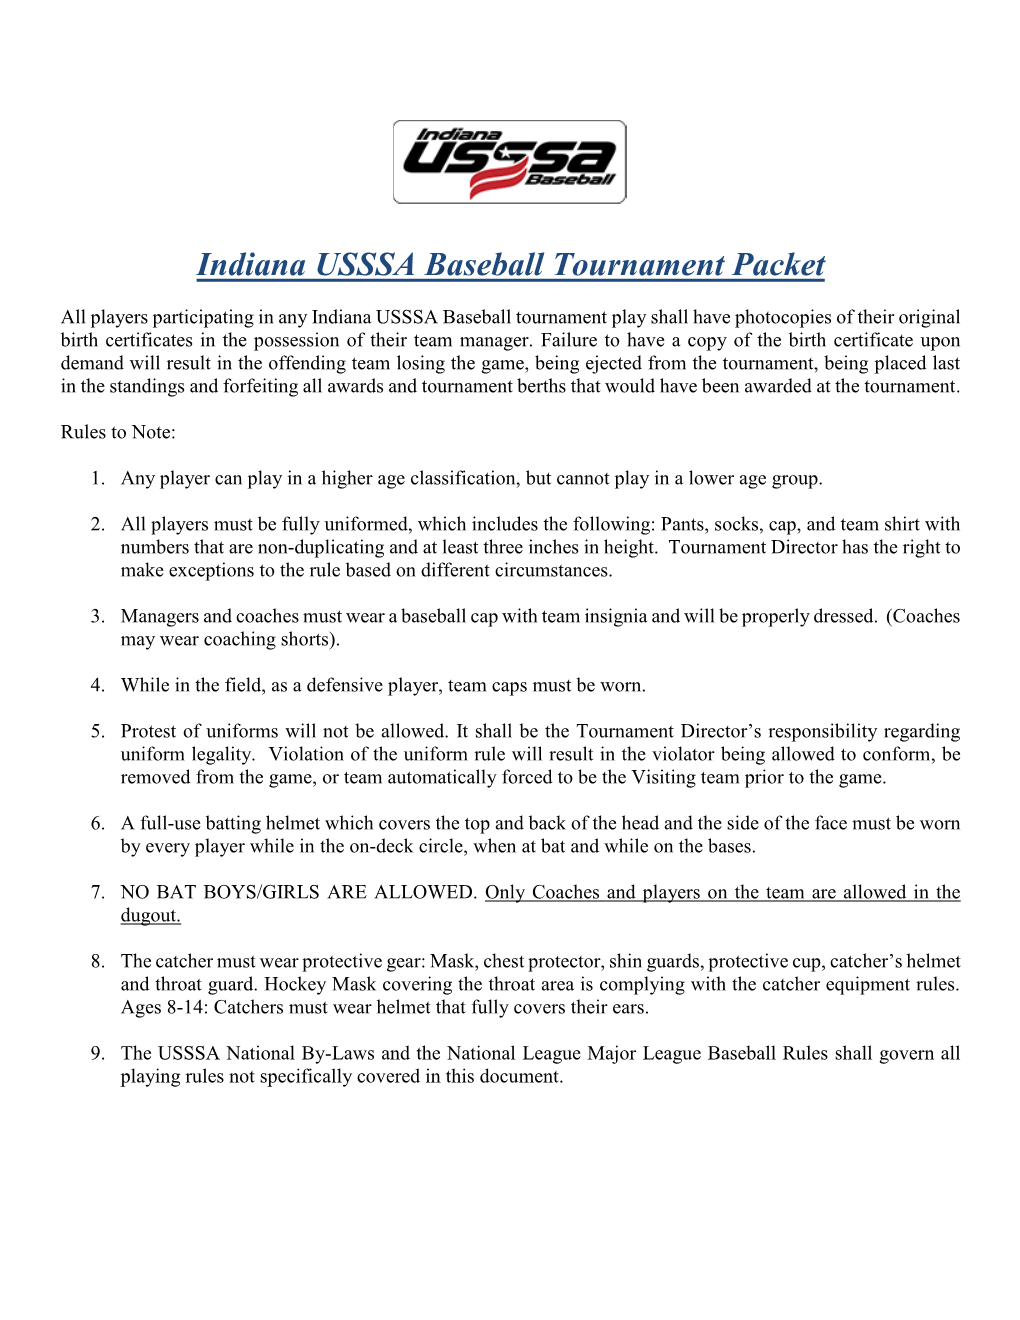 2021 USSSA Baseball Rules Packet